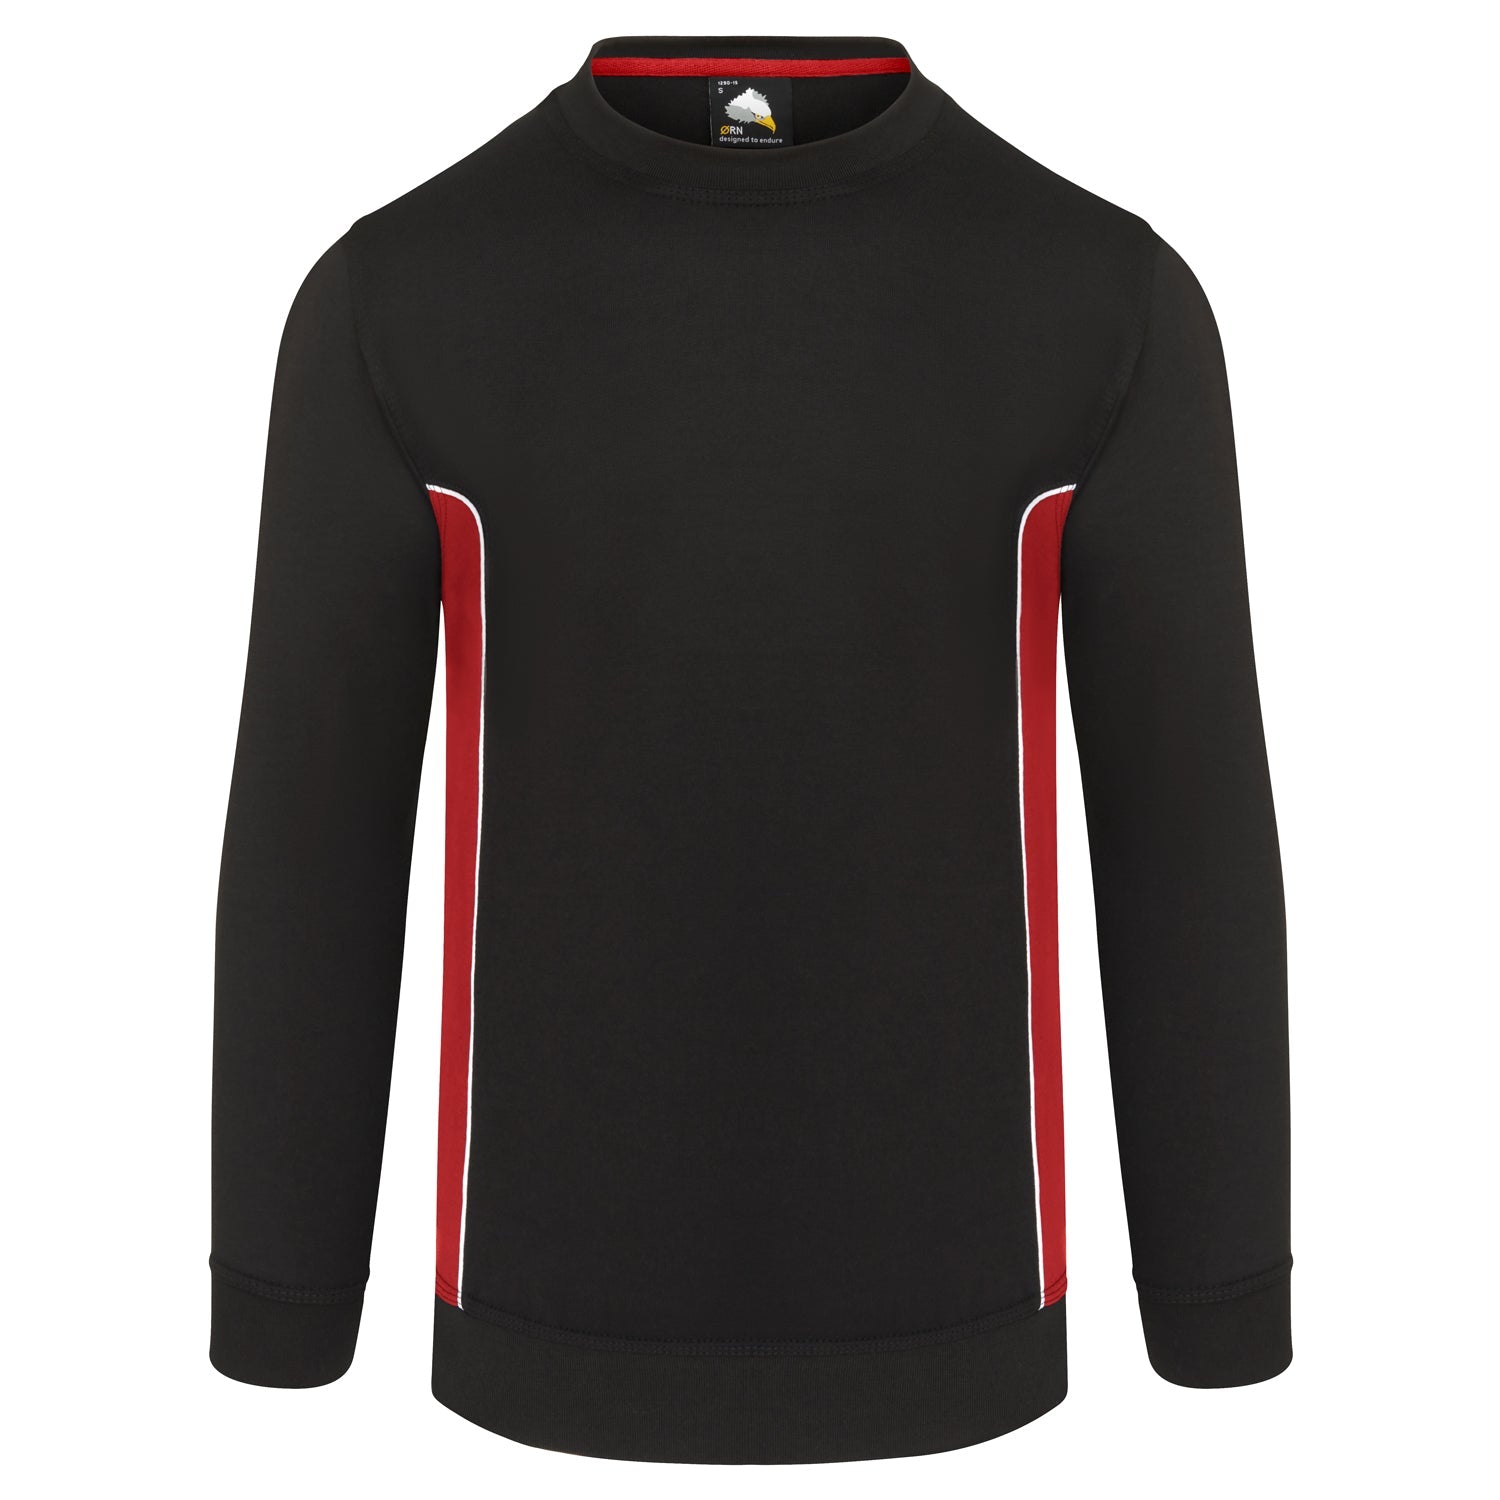 ORN Silverswift Two Tone Workwear Sweatshirt - Black/Red